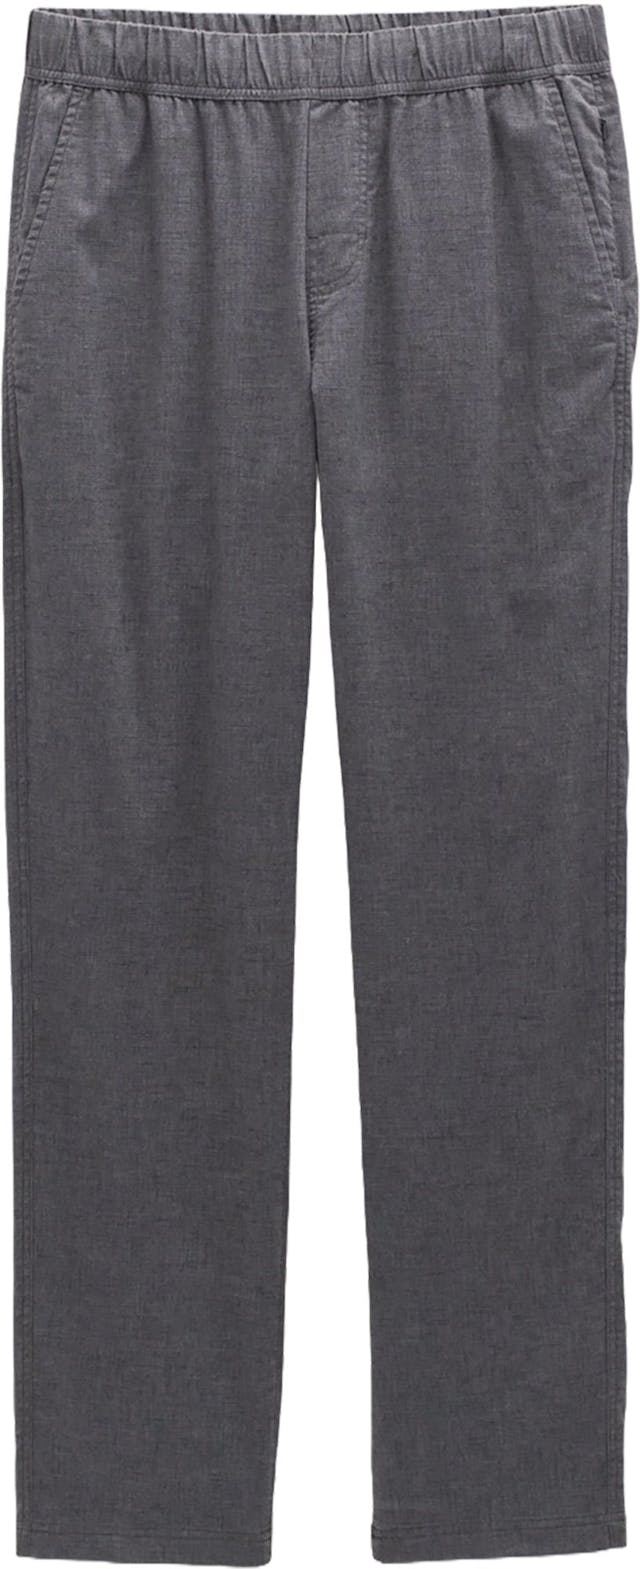 Product image for Vaha E-Waist Pant - Men's